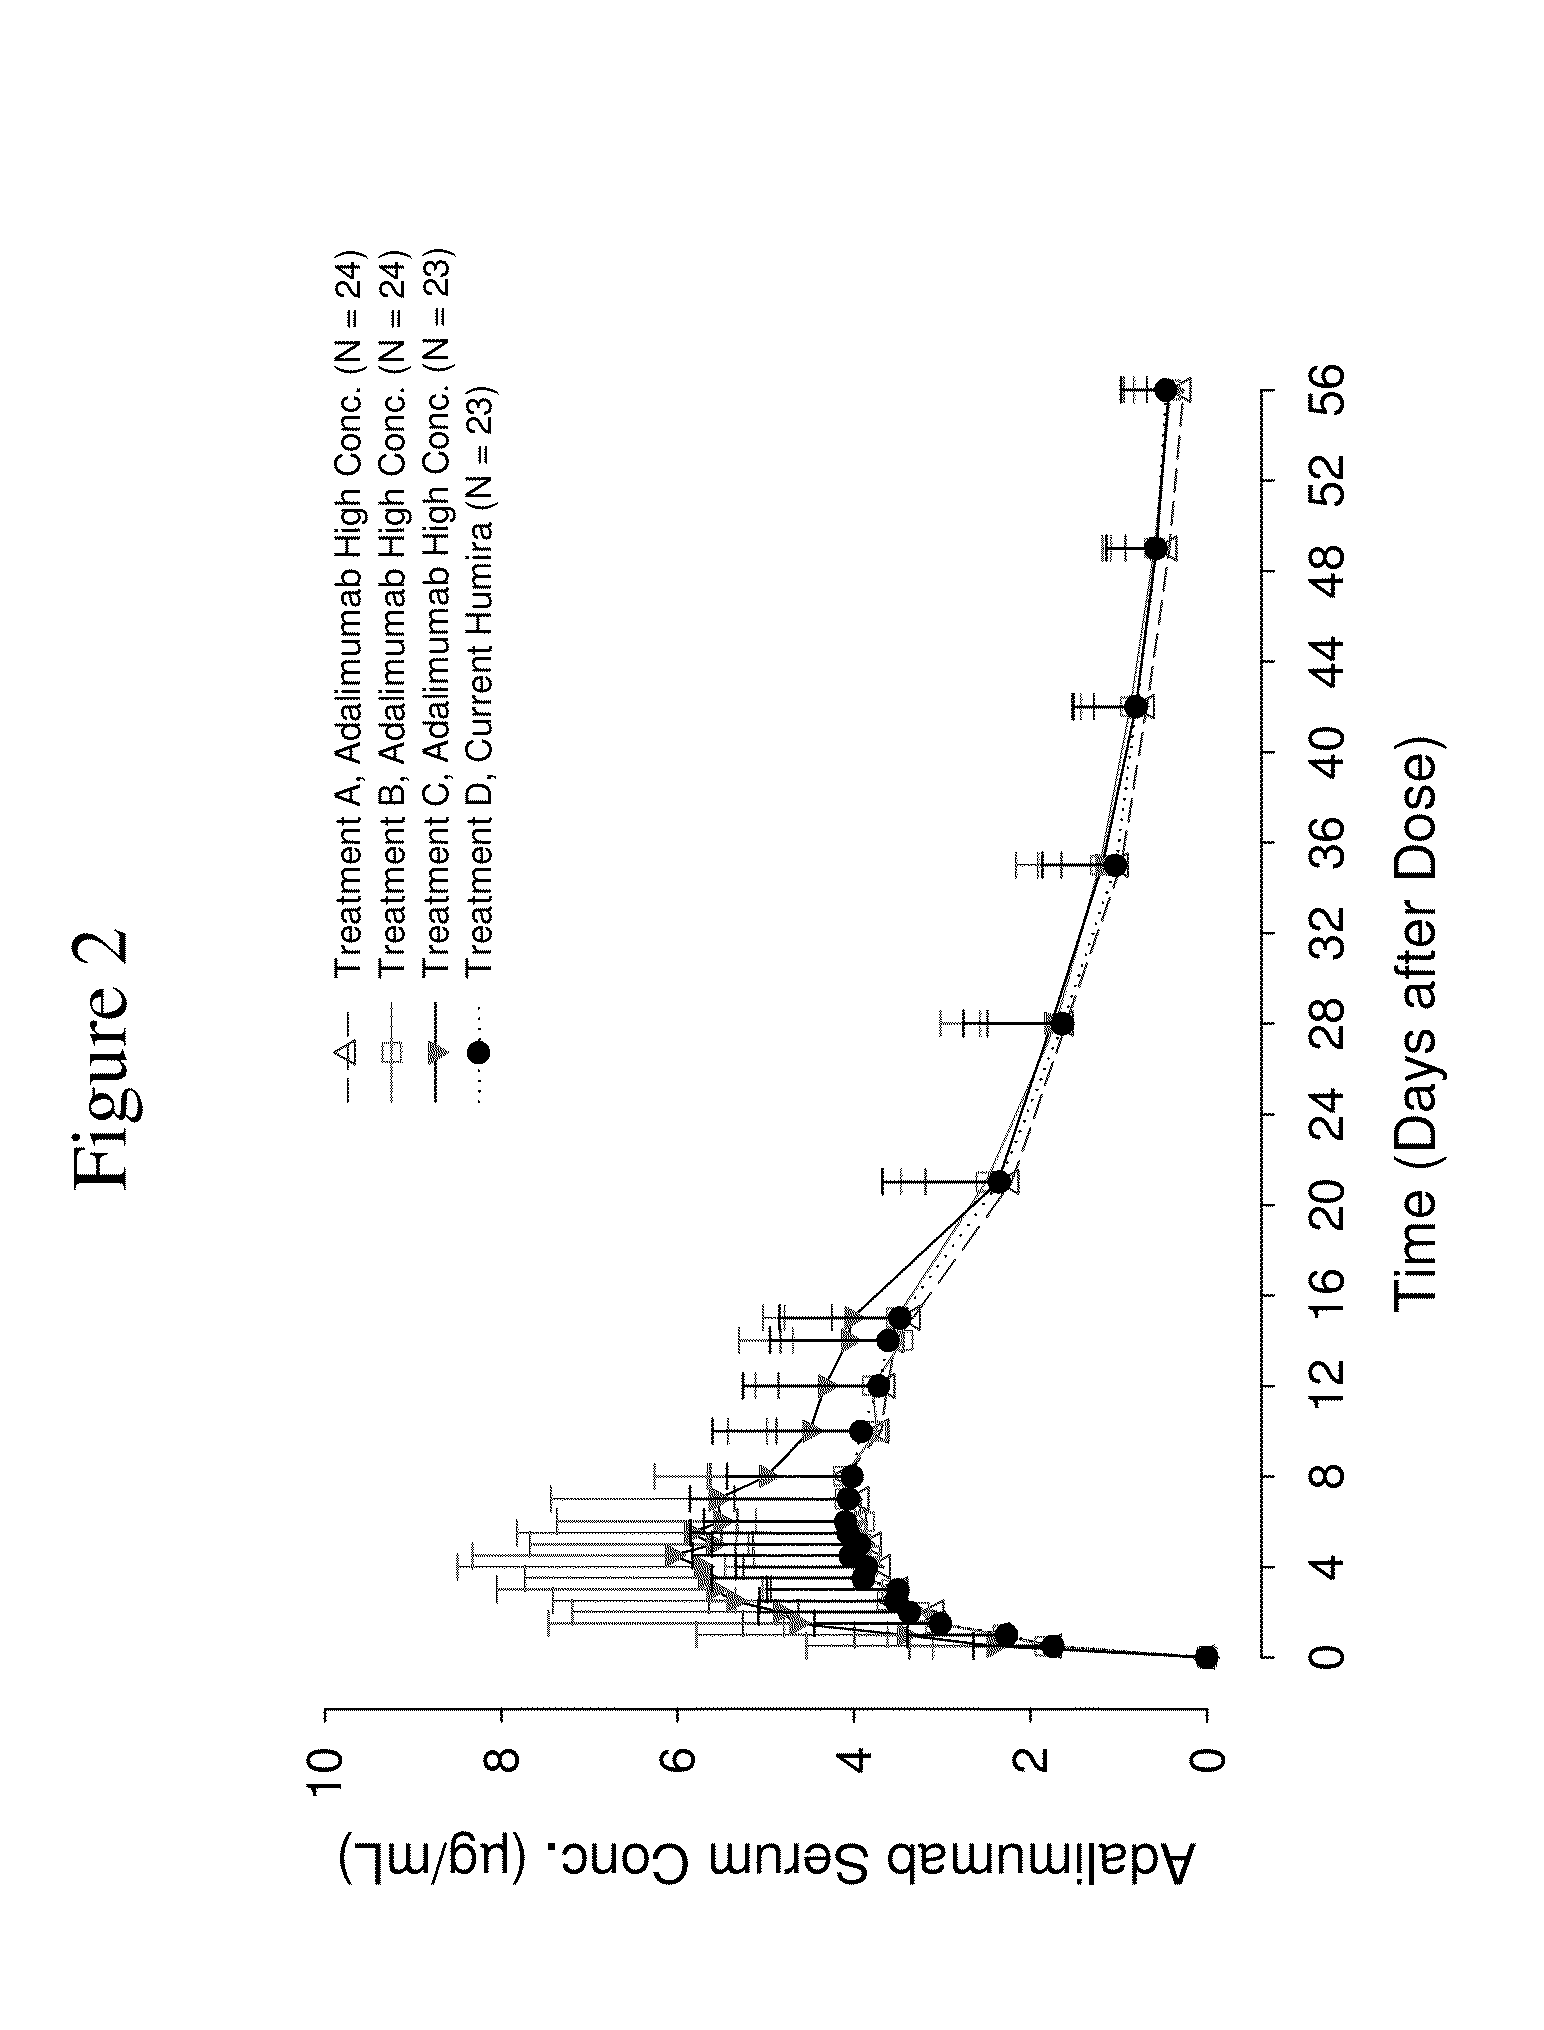 High concentration anti-TNFα antibody liquid formulations